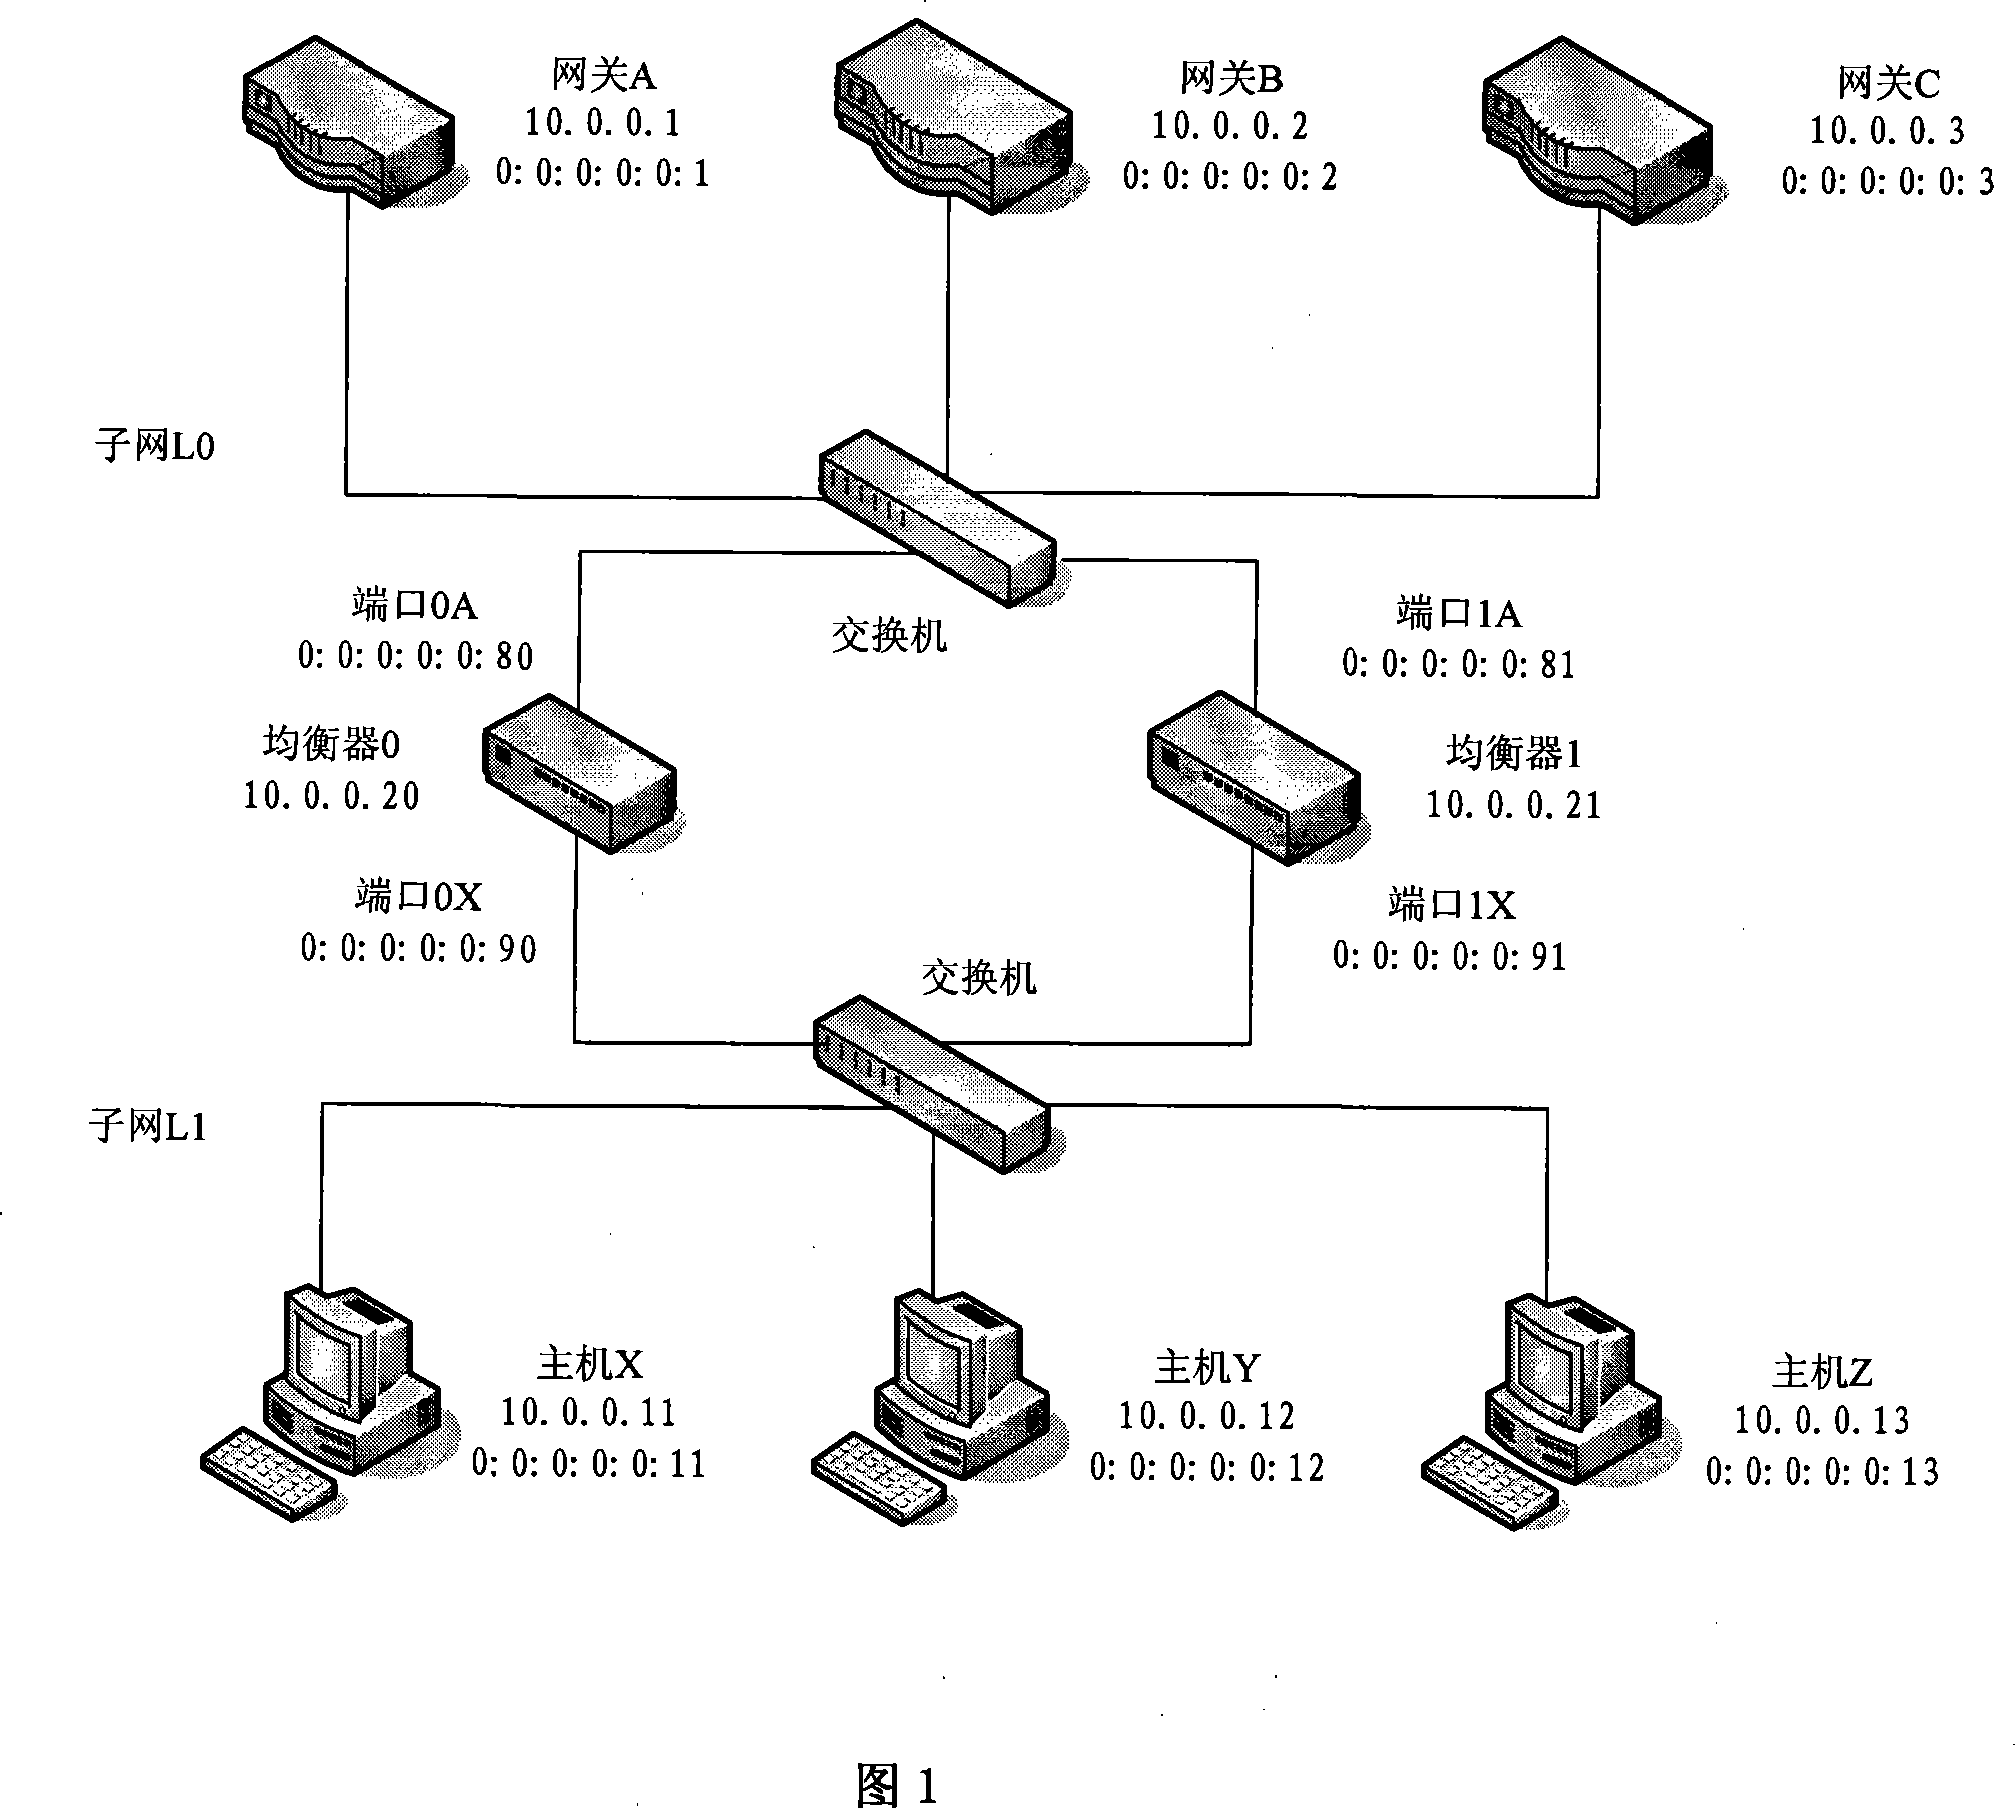 Ethernet load balancing method